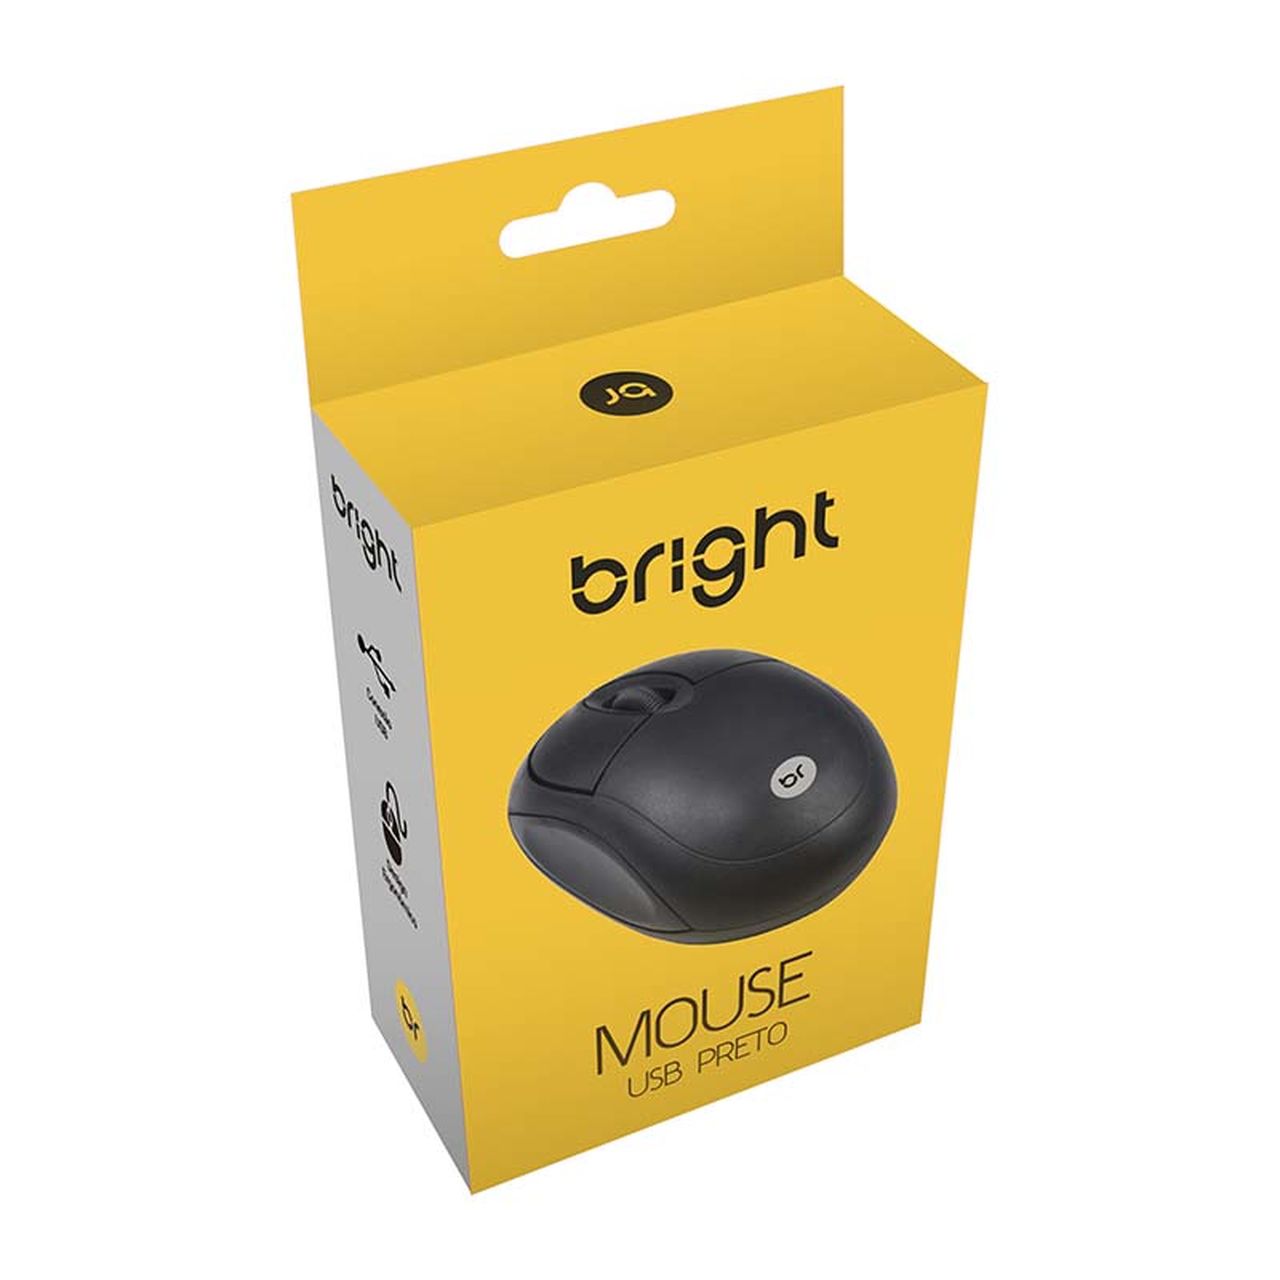 Mouse Usb Simples Óptico com Fio Pc Notebook 106 Bright - BRIGHT